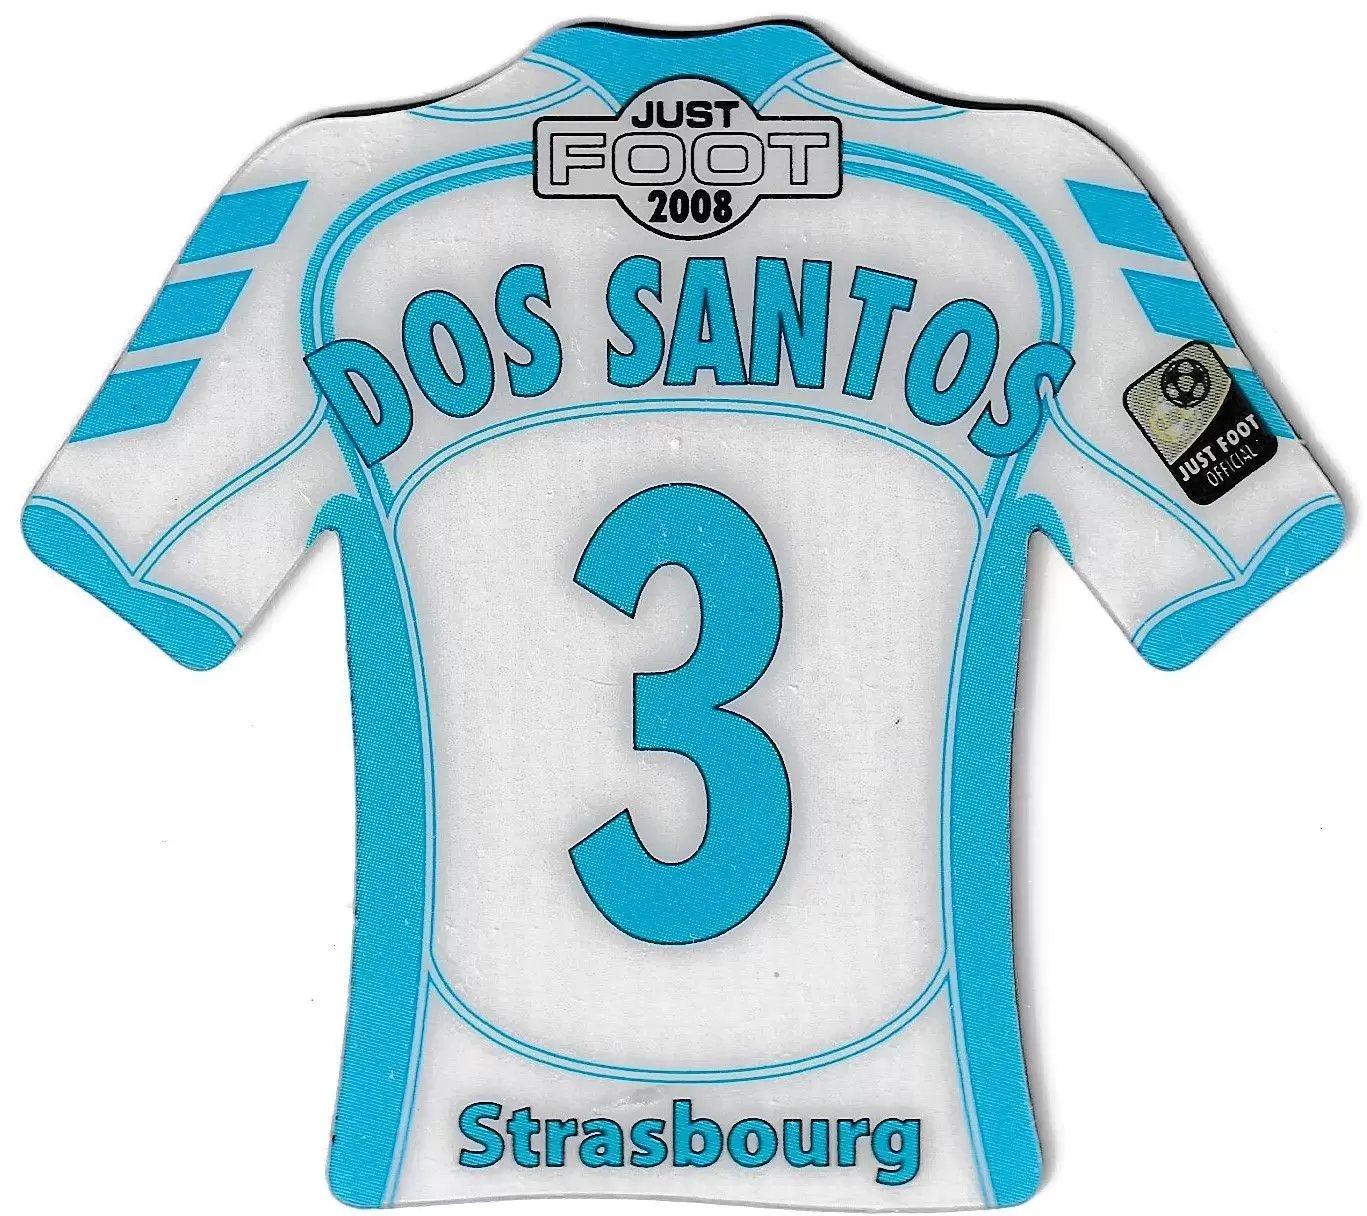 Just Foot 2008 - Strasbourg 3 - Dos Santos